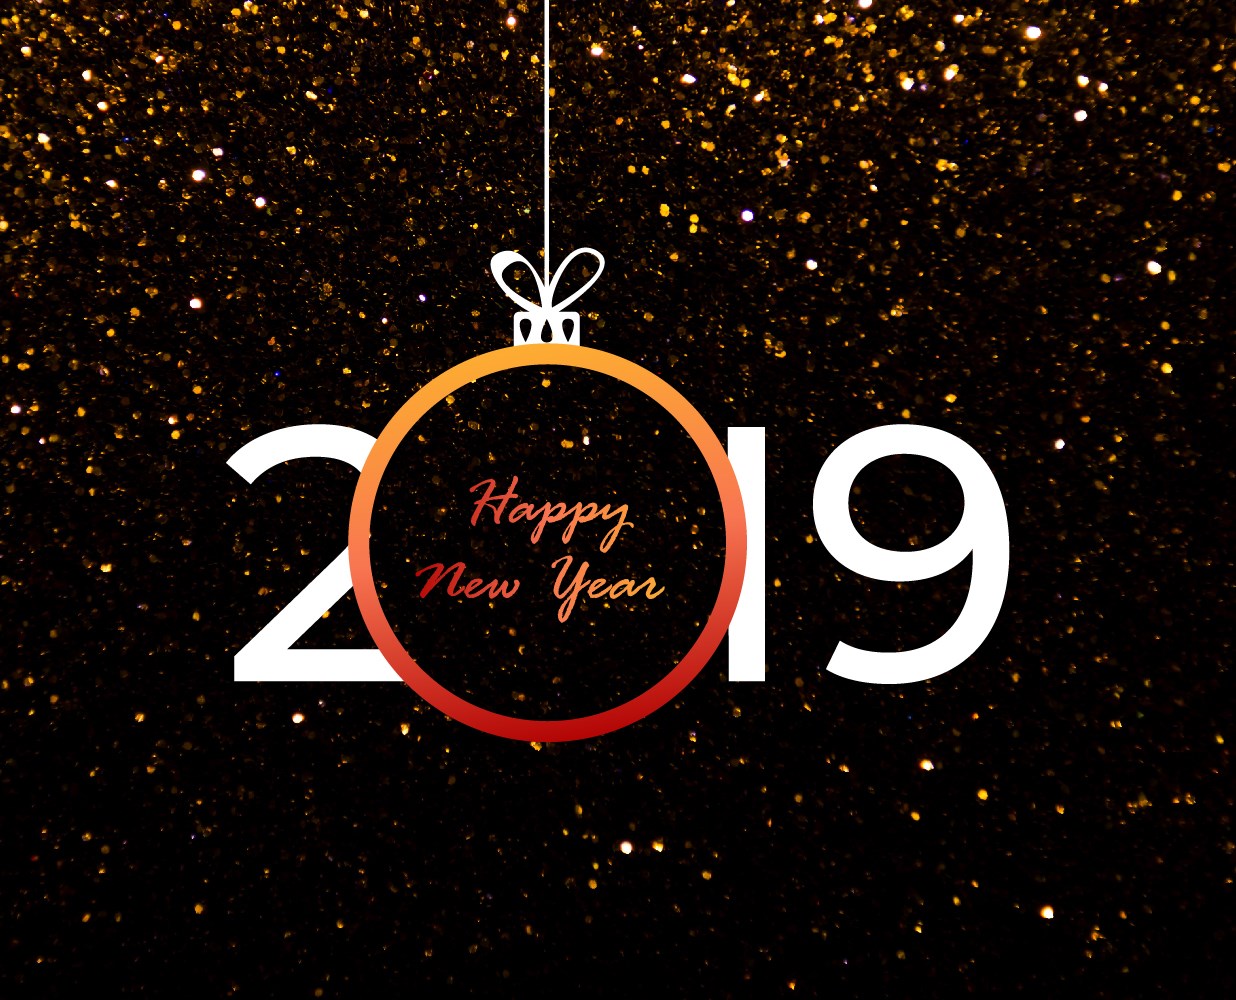 happy-new-year-2019.jpg